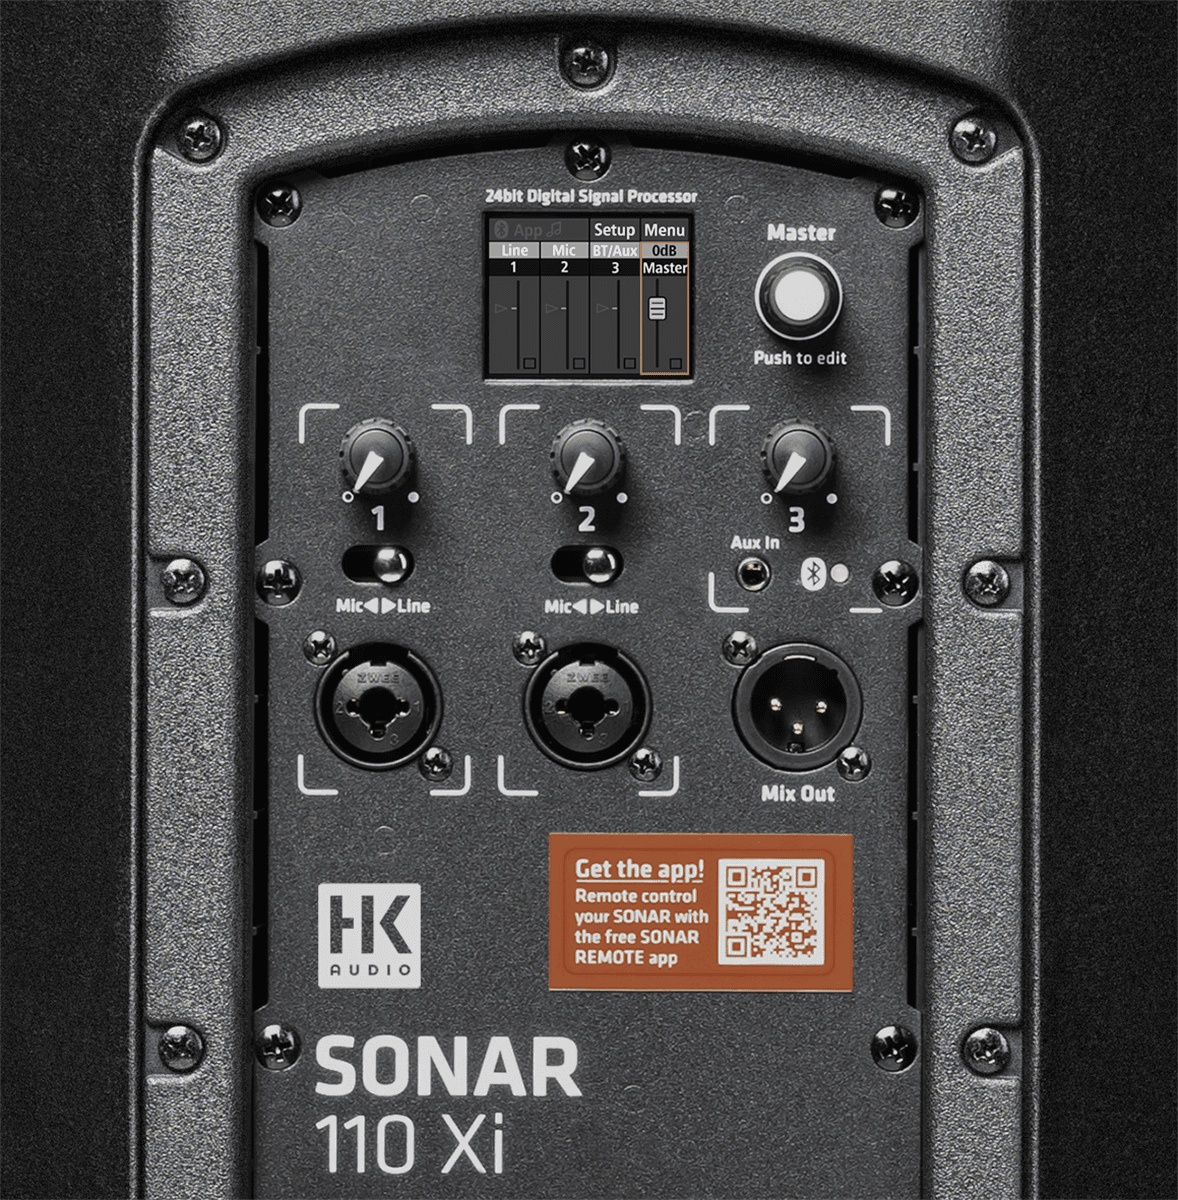 HK Audio - Sonar 110 Xi